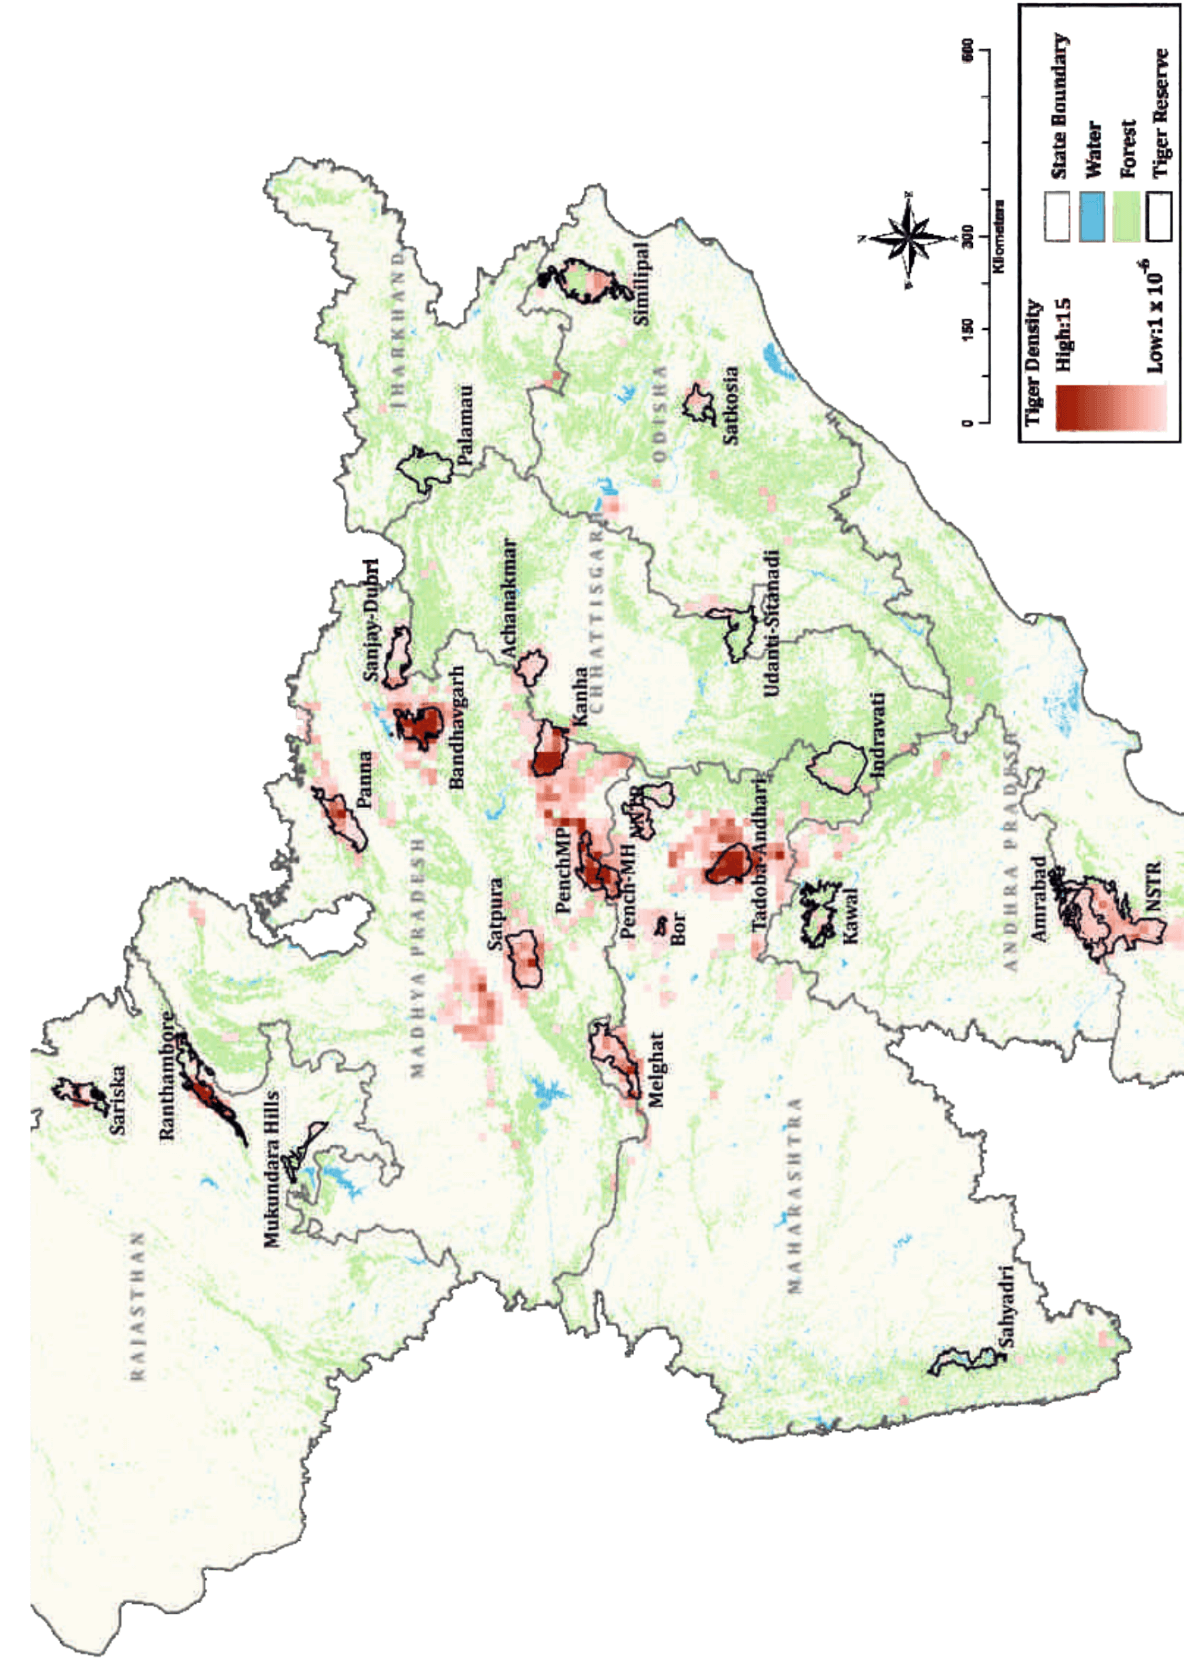 Tiger Reserves in Madhya Pradesh, Maharashtra, Rajasthan, Telangana, Odisha, Chhattisgarh